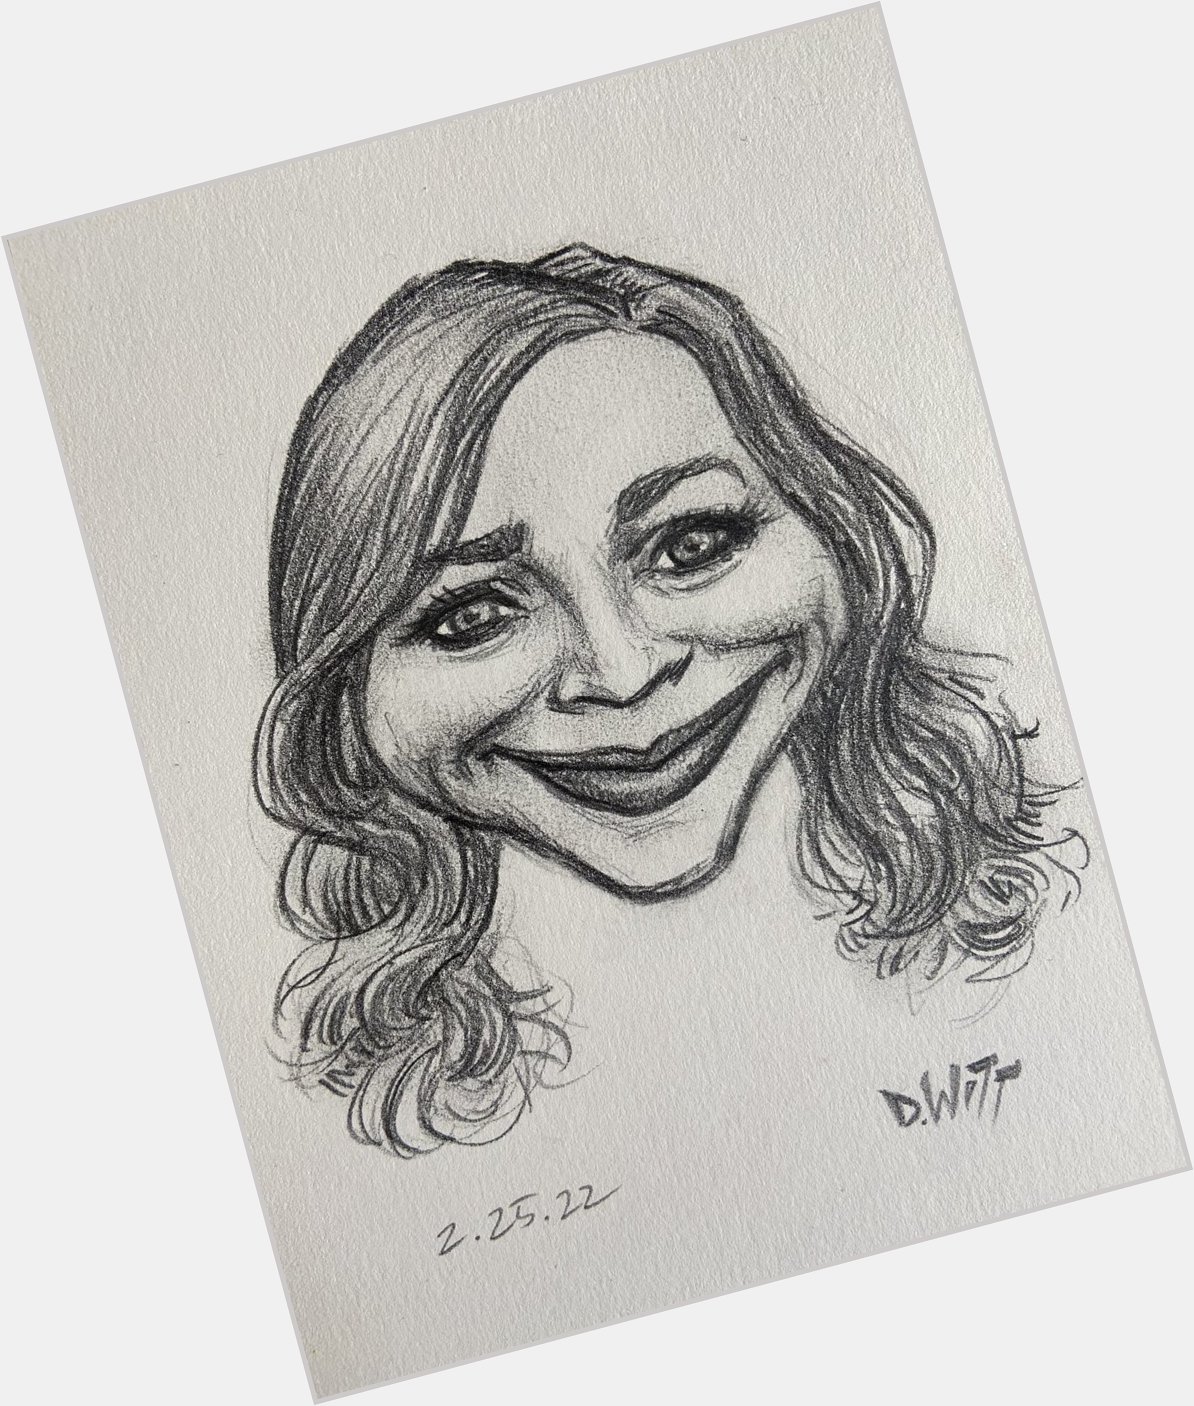 Today s caricature practice: Happy Birthday to Rashida Jones!
Also, Putin, go fuck yourself. 